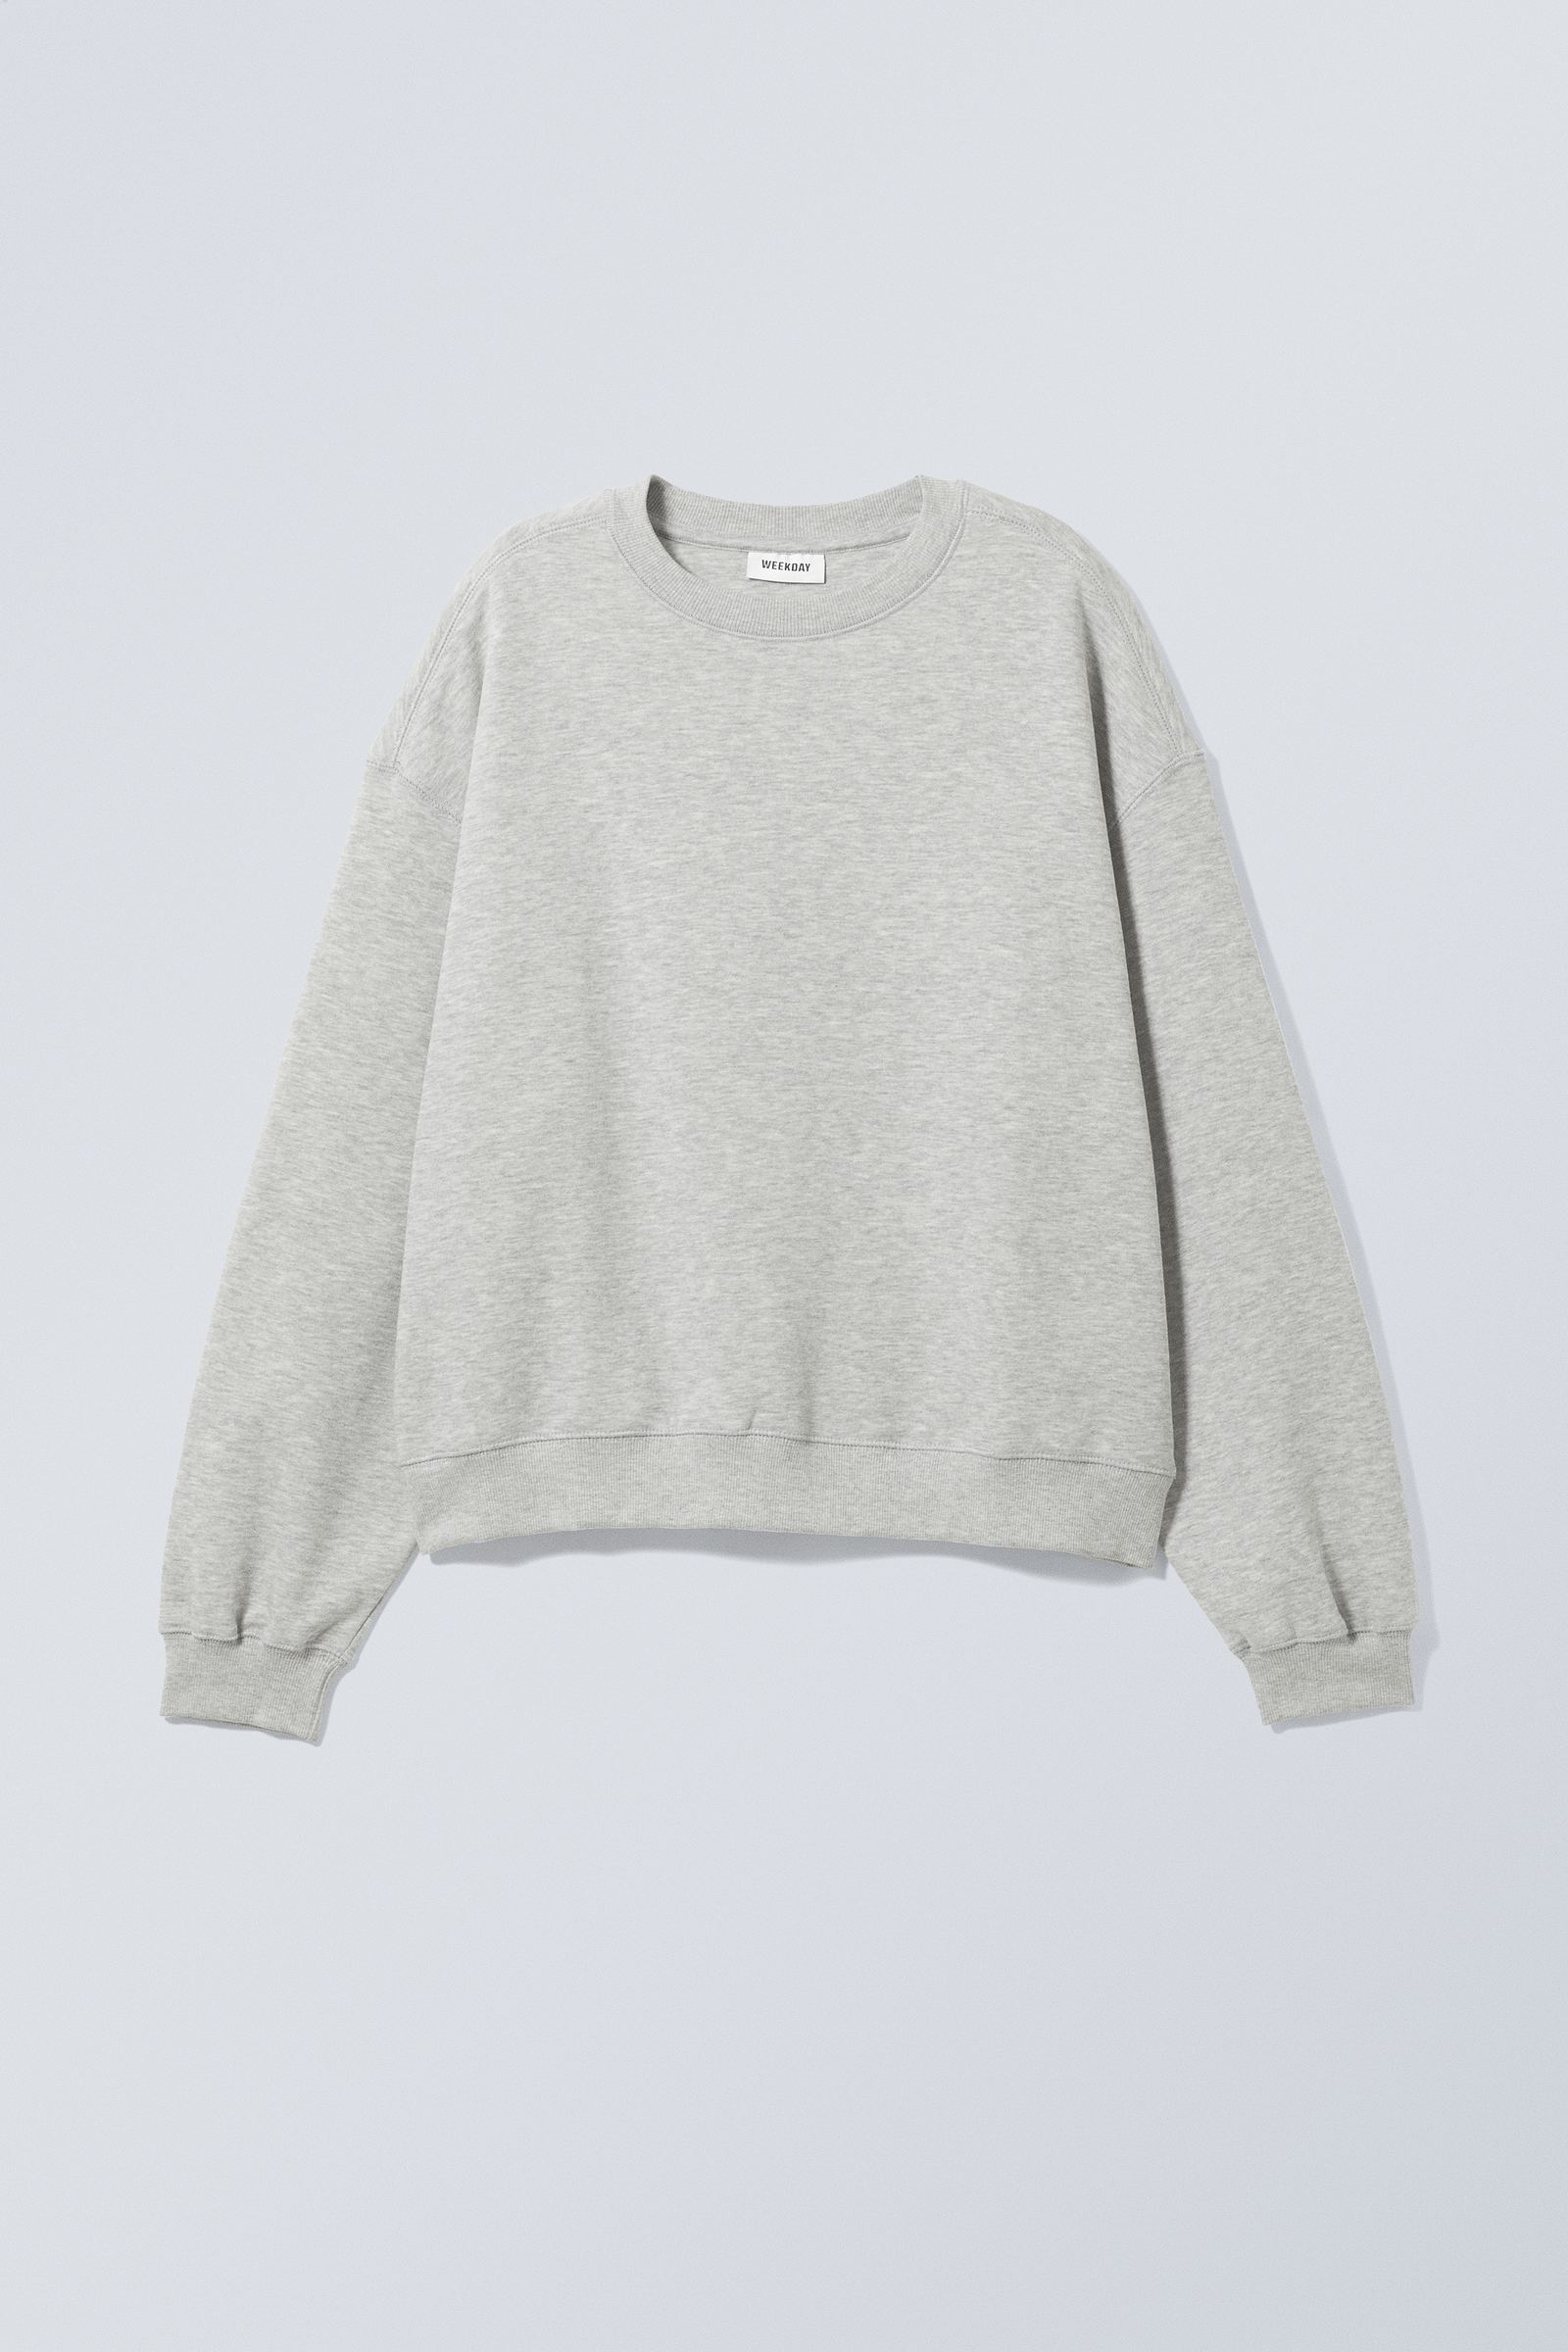 #808080 - Essence Standard Sweatshirt - 2